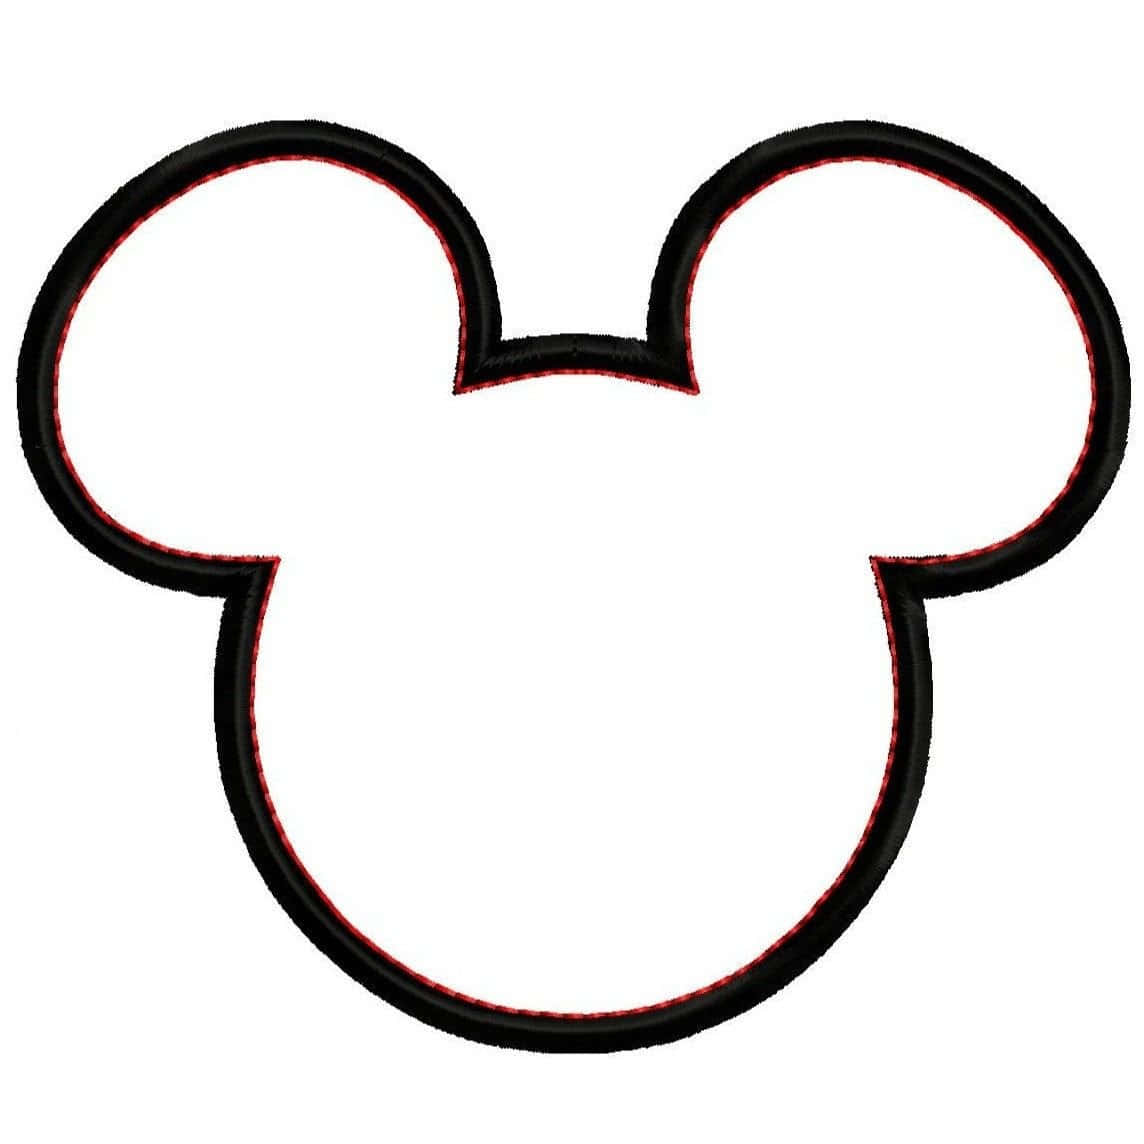 Visaupp Din Disney-anda Med Musse Pigg-öron På Din Datorskärm Eller Mobiltelefons Bakgrundsbild! Wallpaper